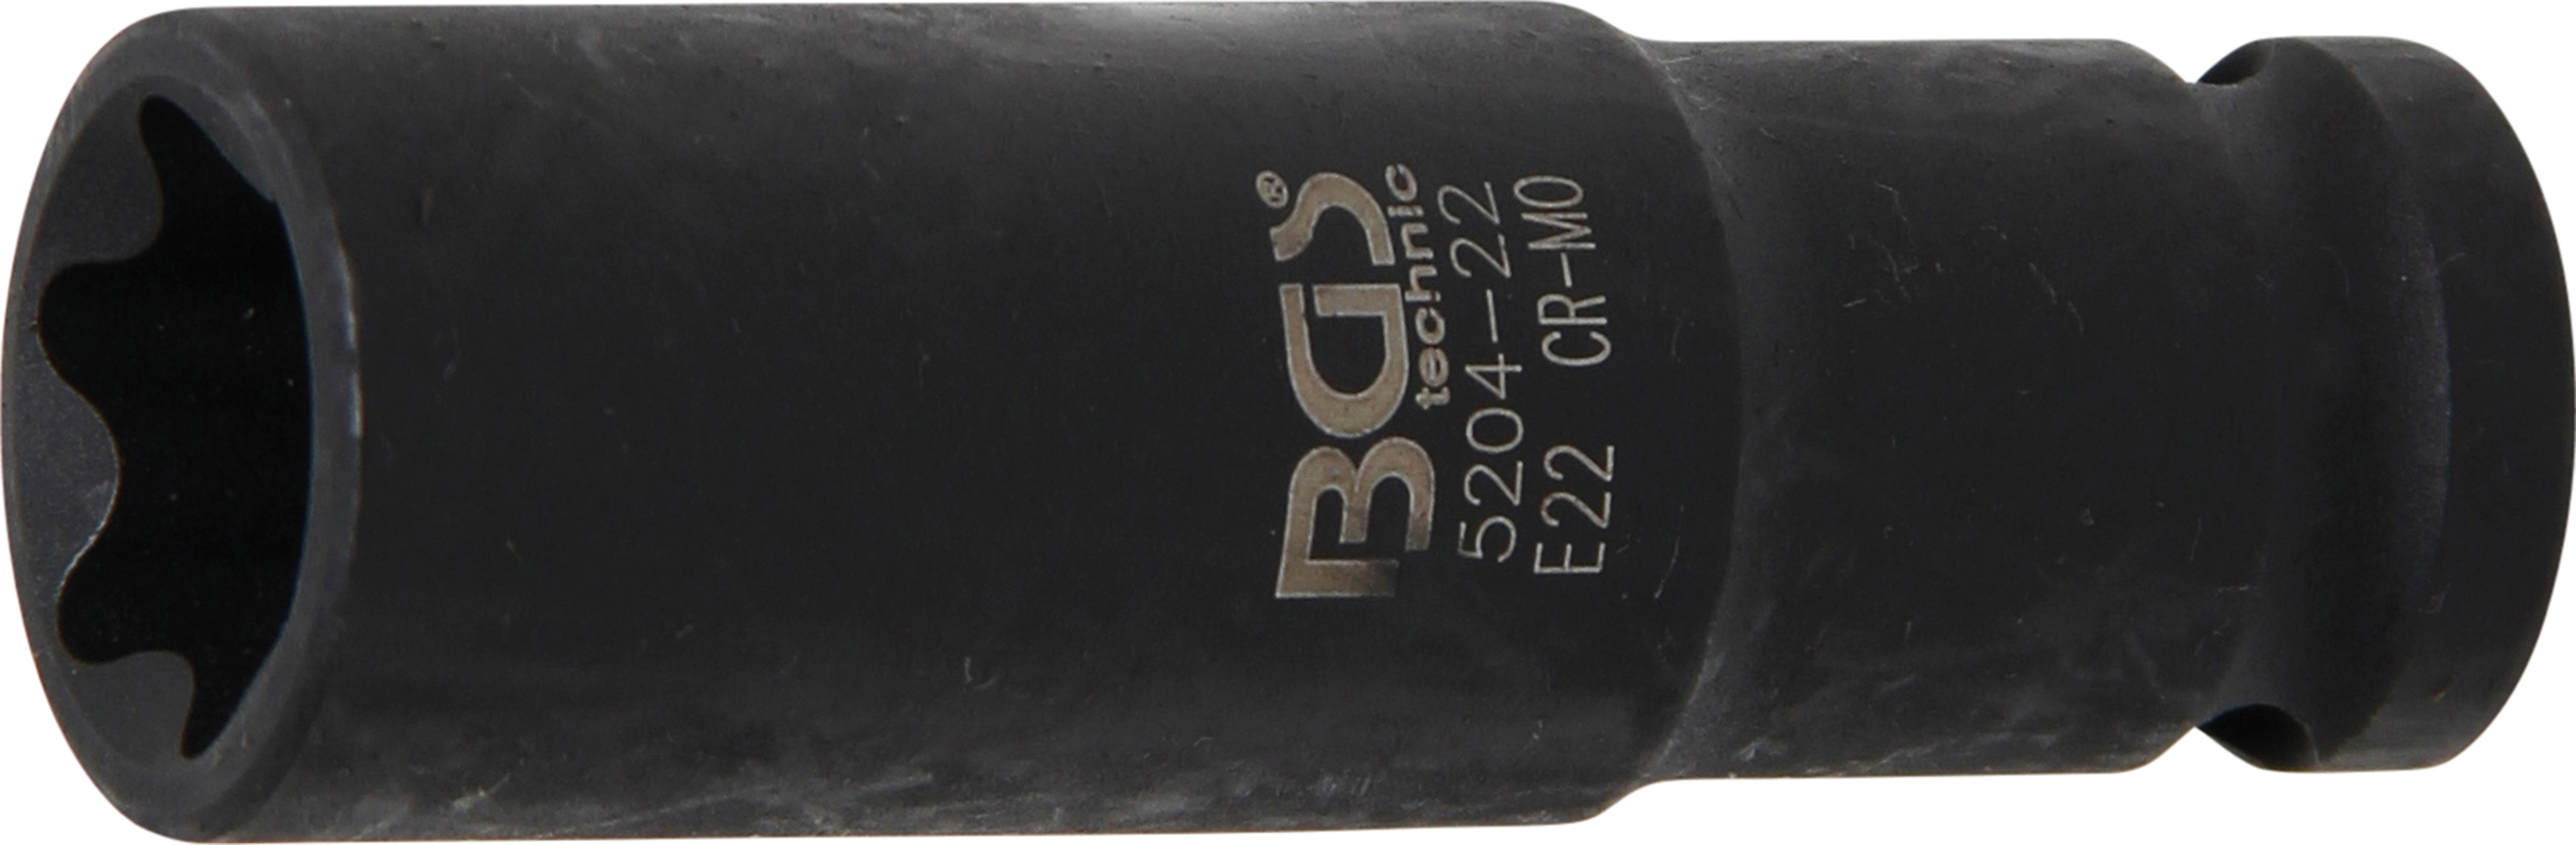 BGS 5204-22 Tubulara de impact Profil E22, antrenare 1/2"